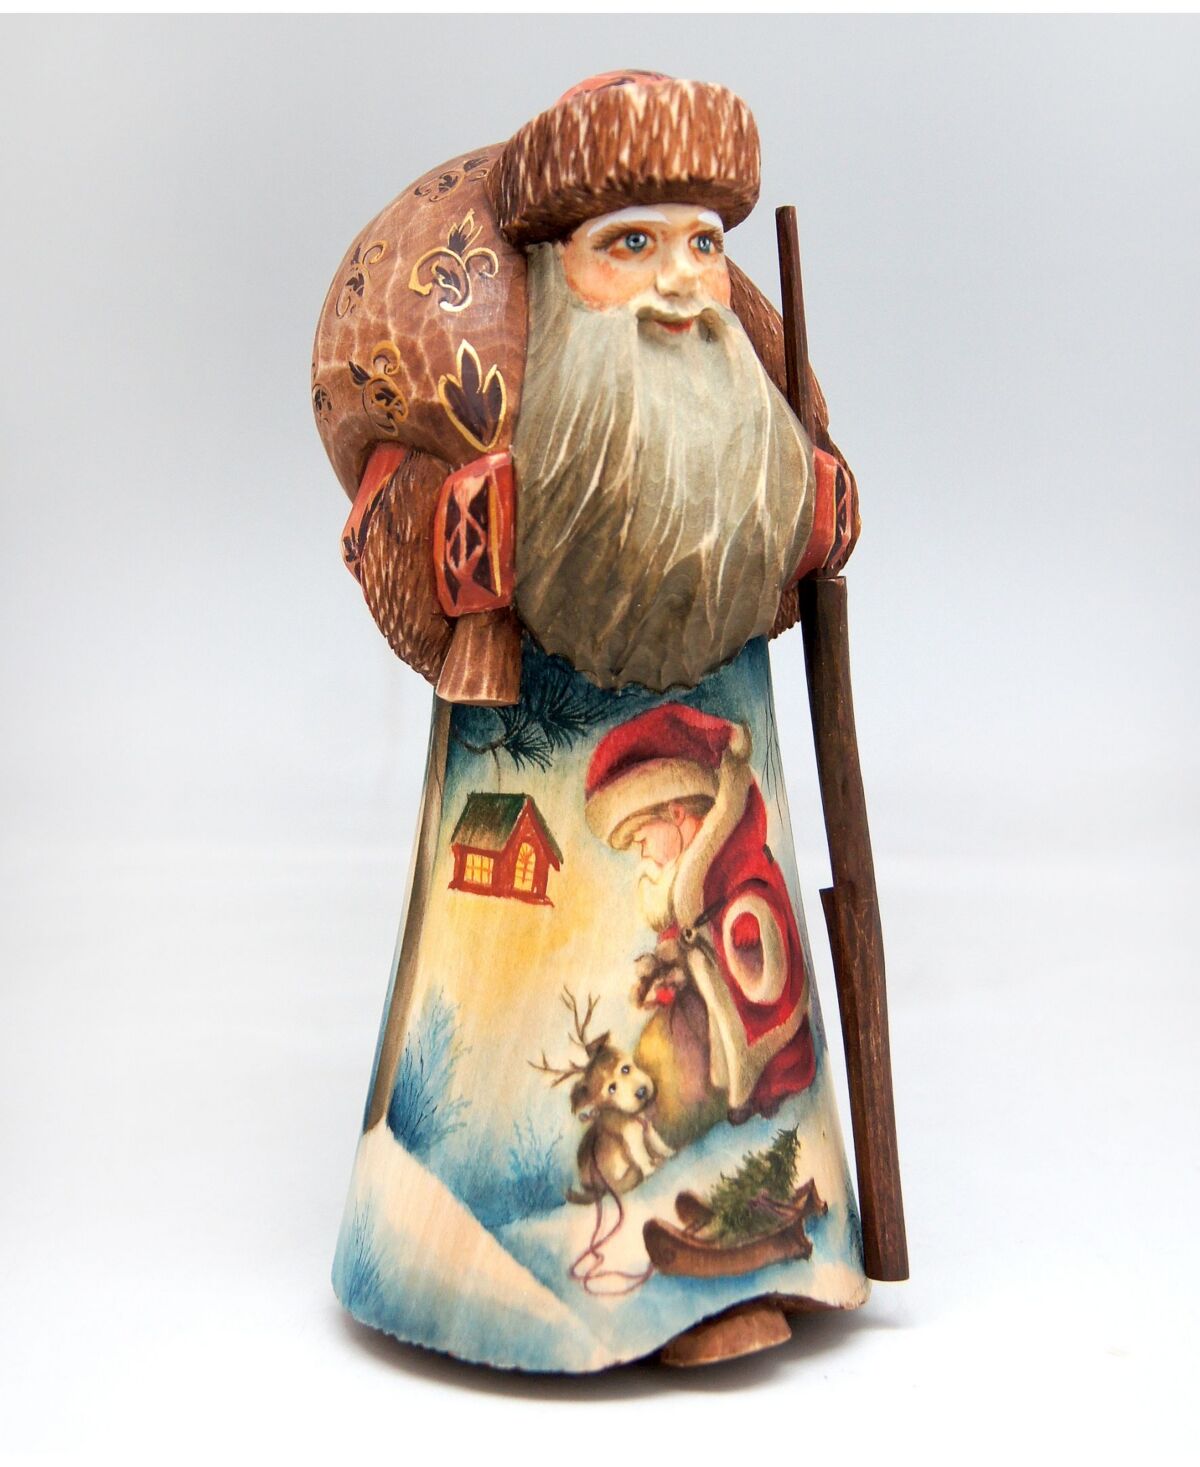 G.DeBrekht Woodcarved and Hand Painted Christmas Fun Santa Figurine - Multi